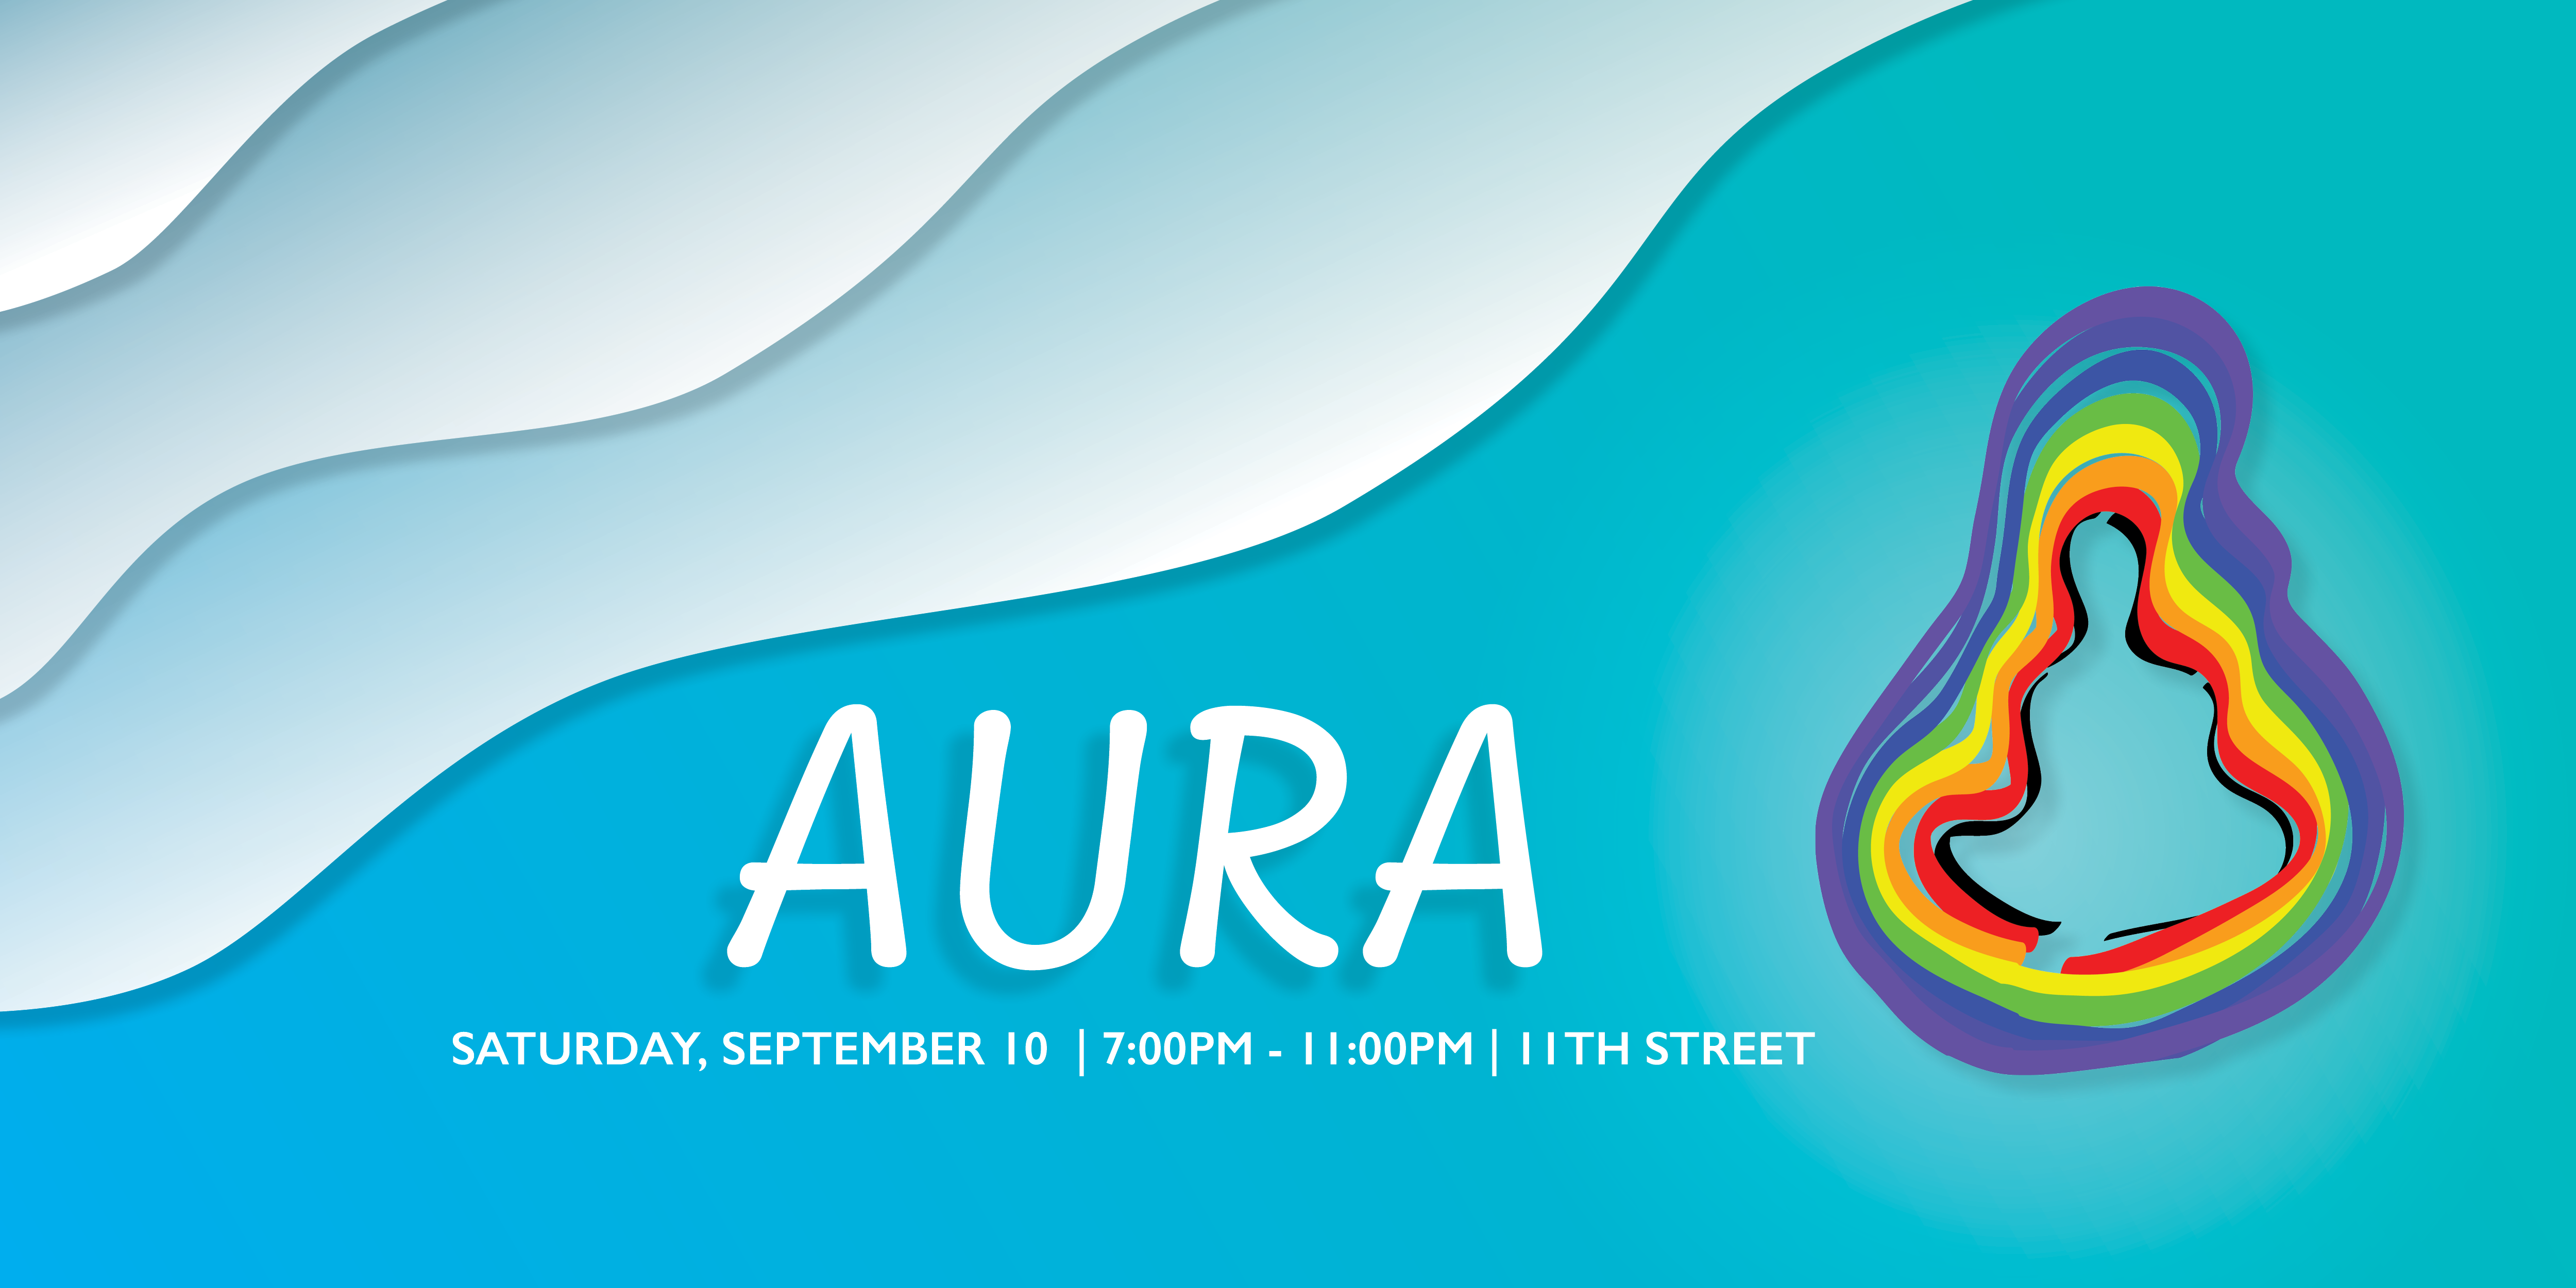 AURA a celebration of sound, dance, and color